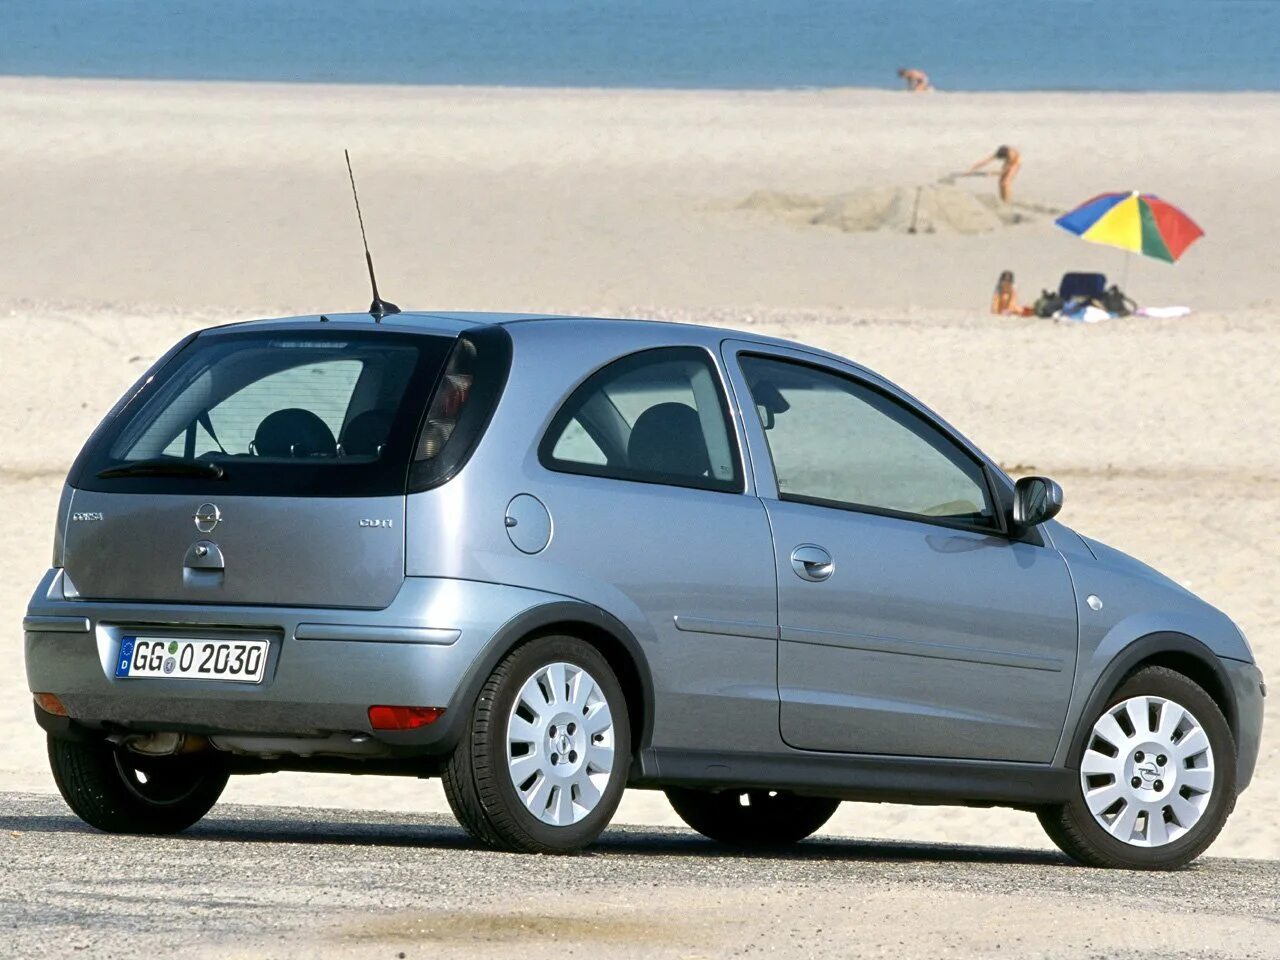 Opel Corsa c 2003. Опель Корса 1.2 2003. Опель Корса 1.2 2001. Opel corsa 2003